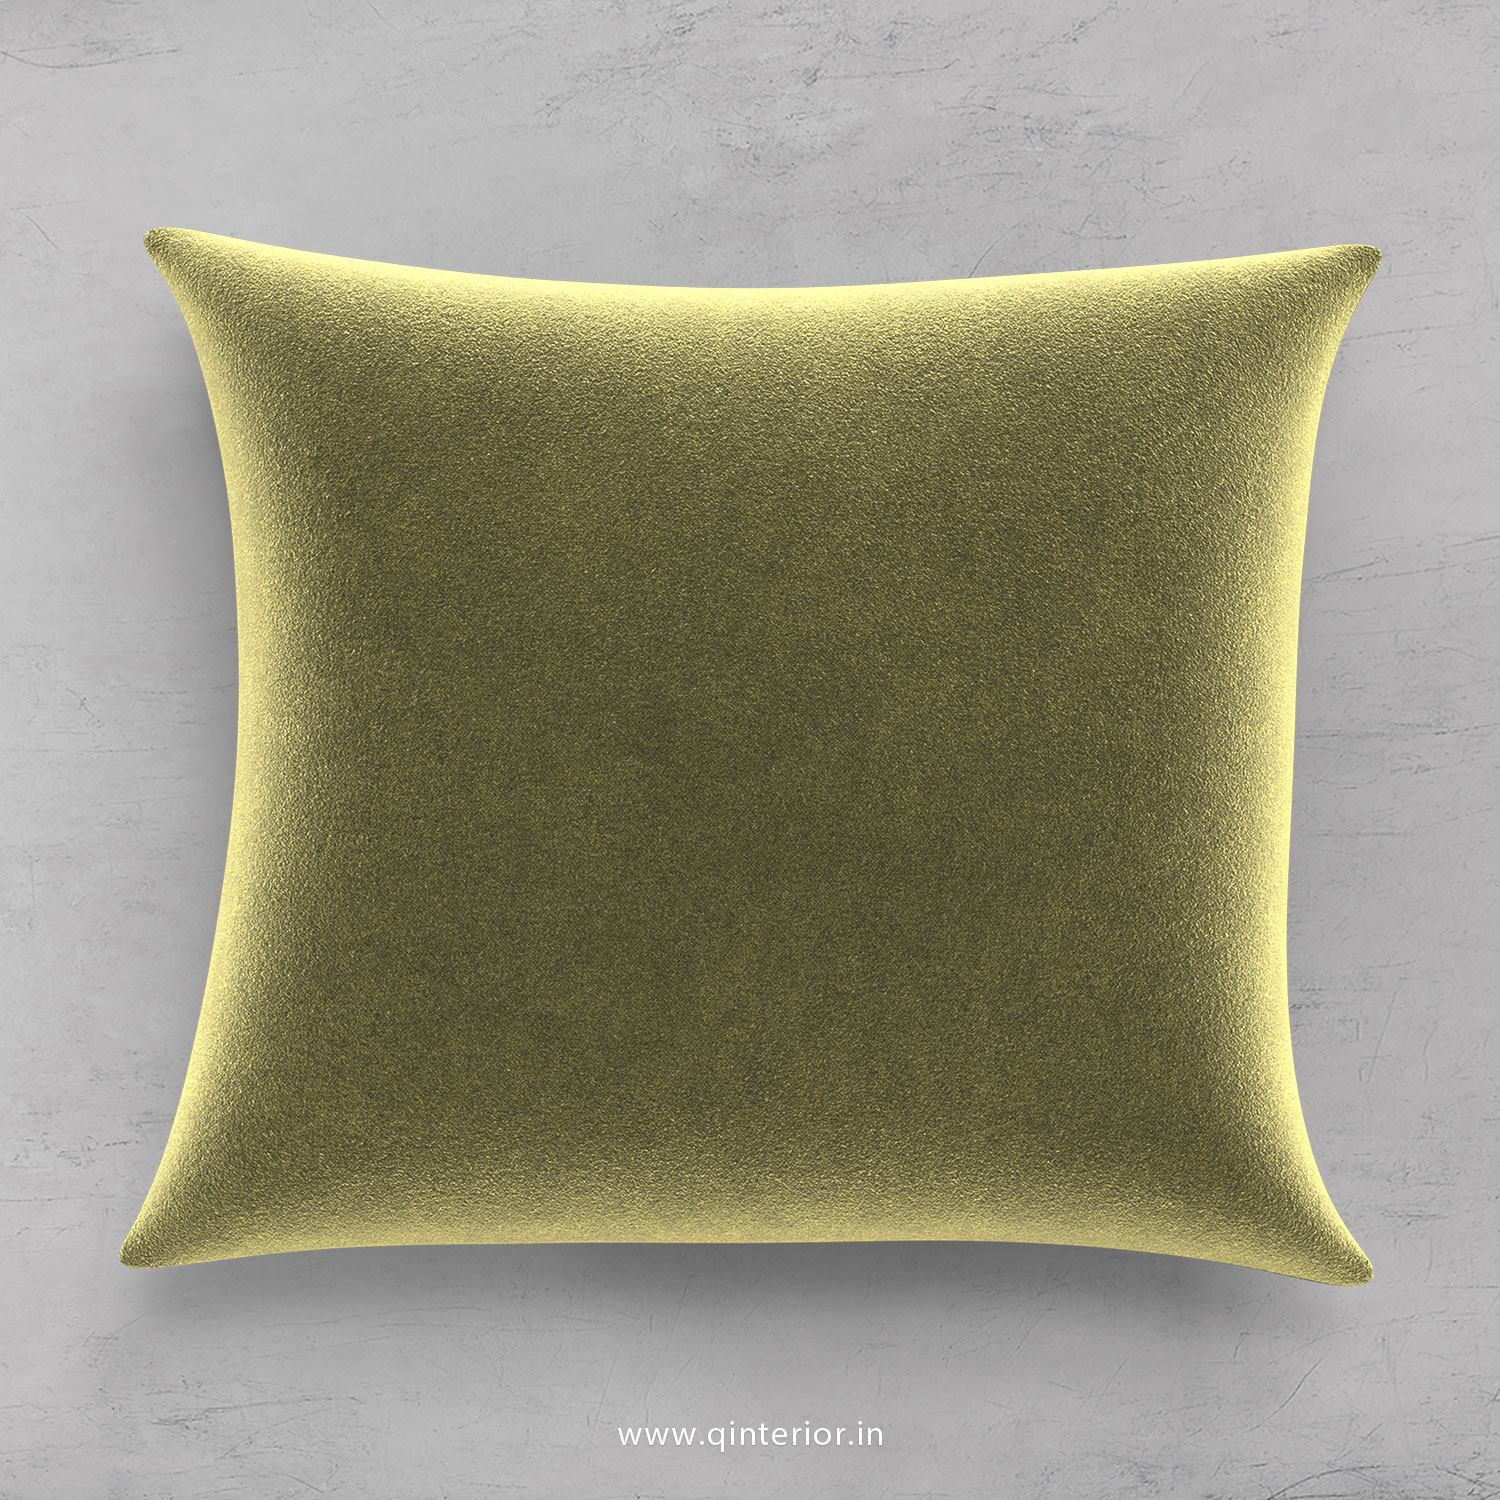 Cushion With Cushion Cover in Velvet Fabric - CUS001 VL04